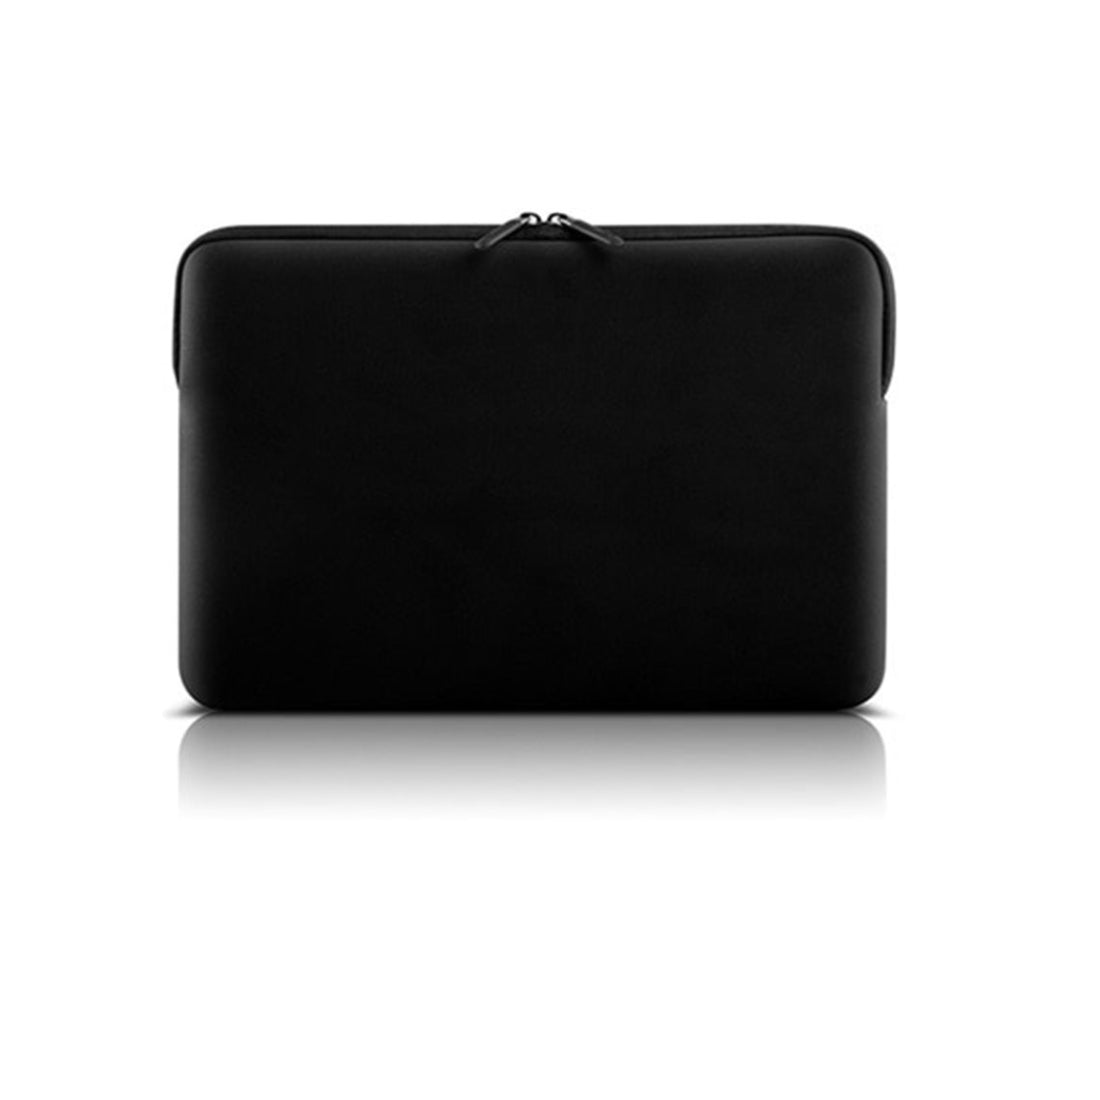 Dell ES1520V Essential Sleeve - Black - حقيبة حاسوب محمول - Store 974 | ستور ٩٧٤